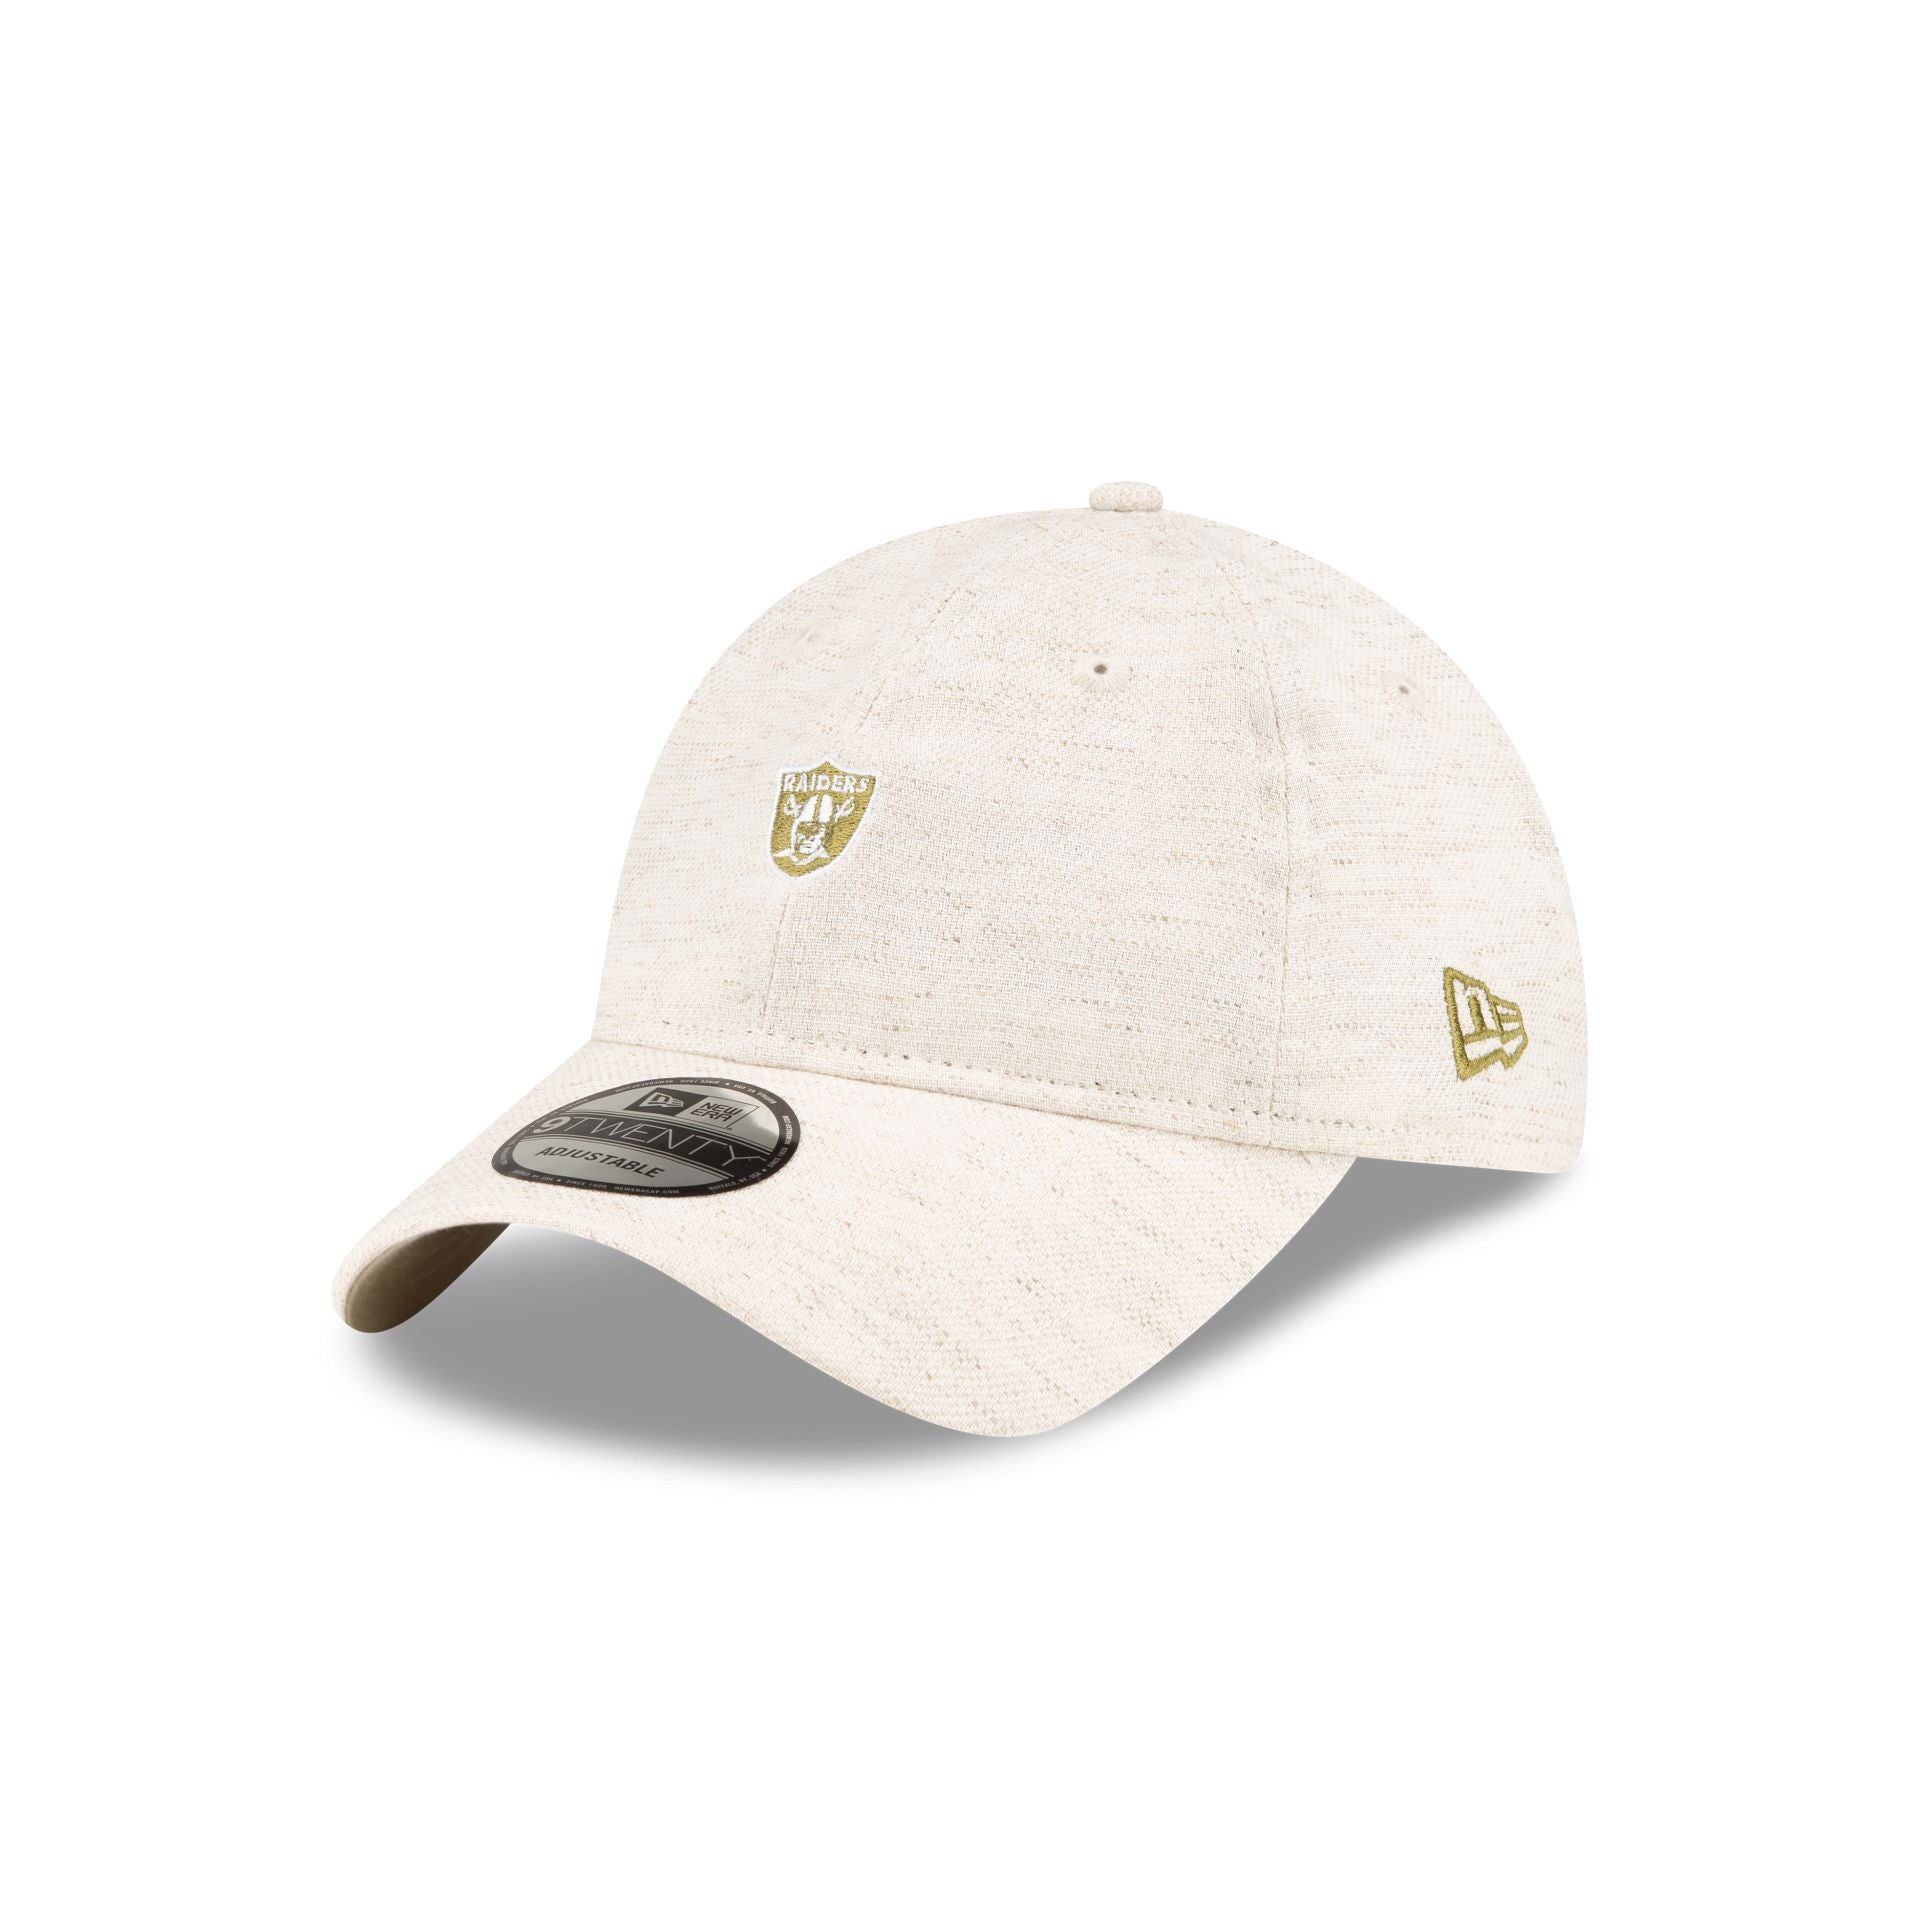 Las Vegas Raiders White Hemp 9TWENTY Adjustable Hat, NFL by New Era